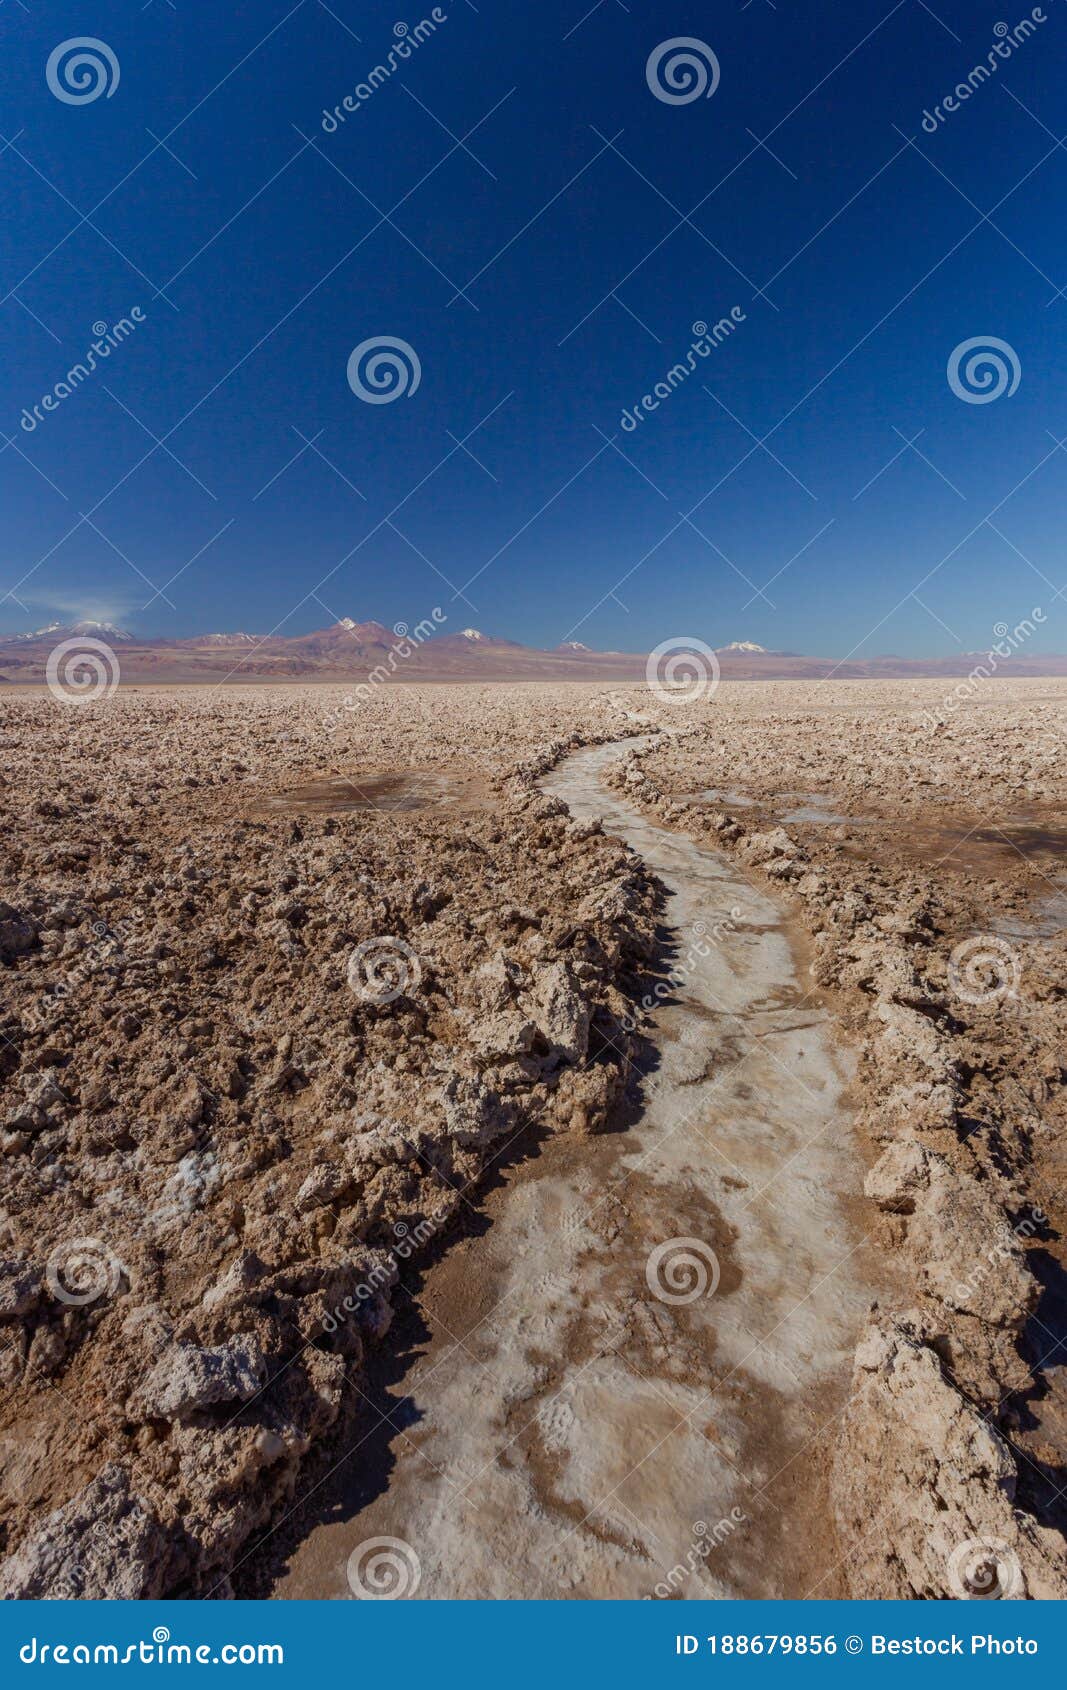 lanscape of long courved path made of salt stones at chaxa lagoon at flamingos national park, atacama